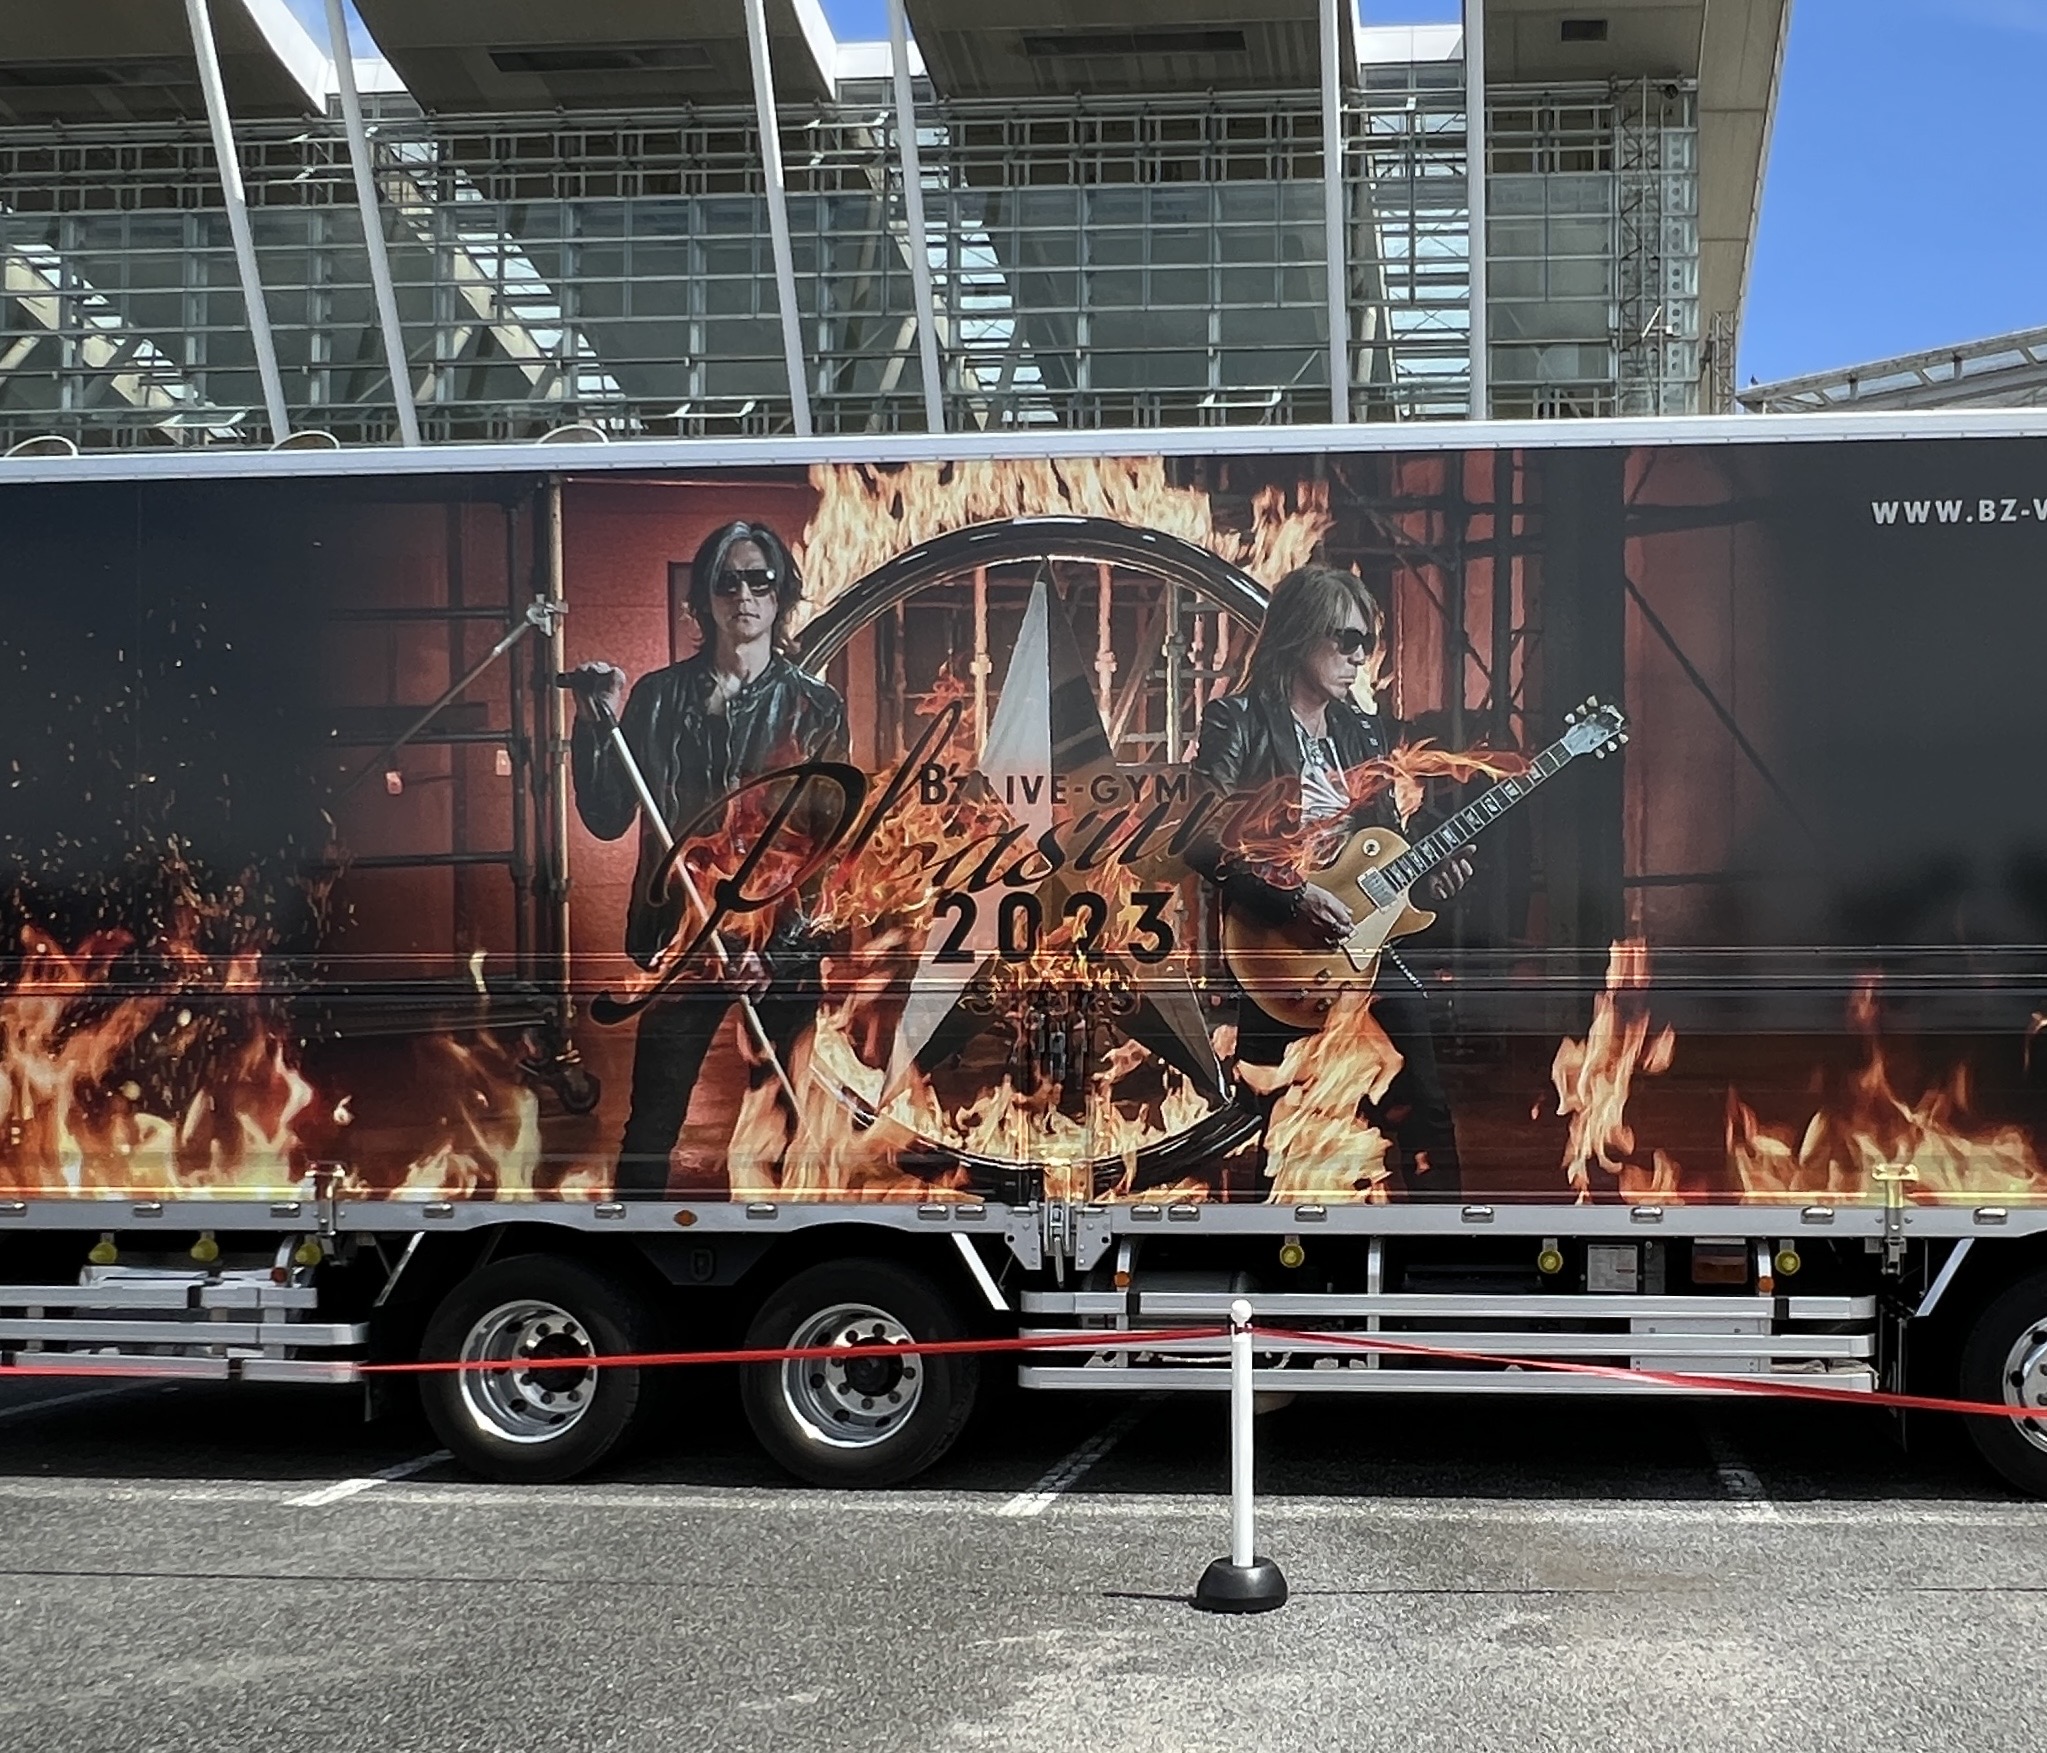 『B'z LIVE-GYM Pleasure 2023 -STARS-』のツアートラックにデザインされた、松本・稲葉が炎に包まれて演奏する写真